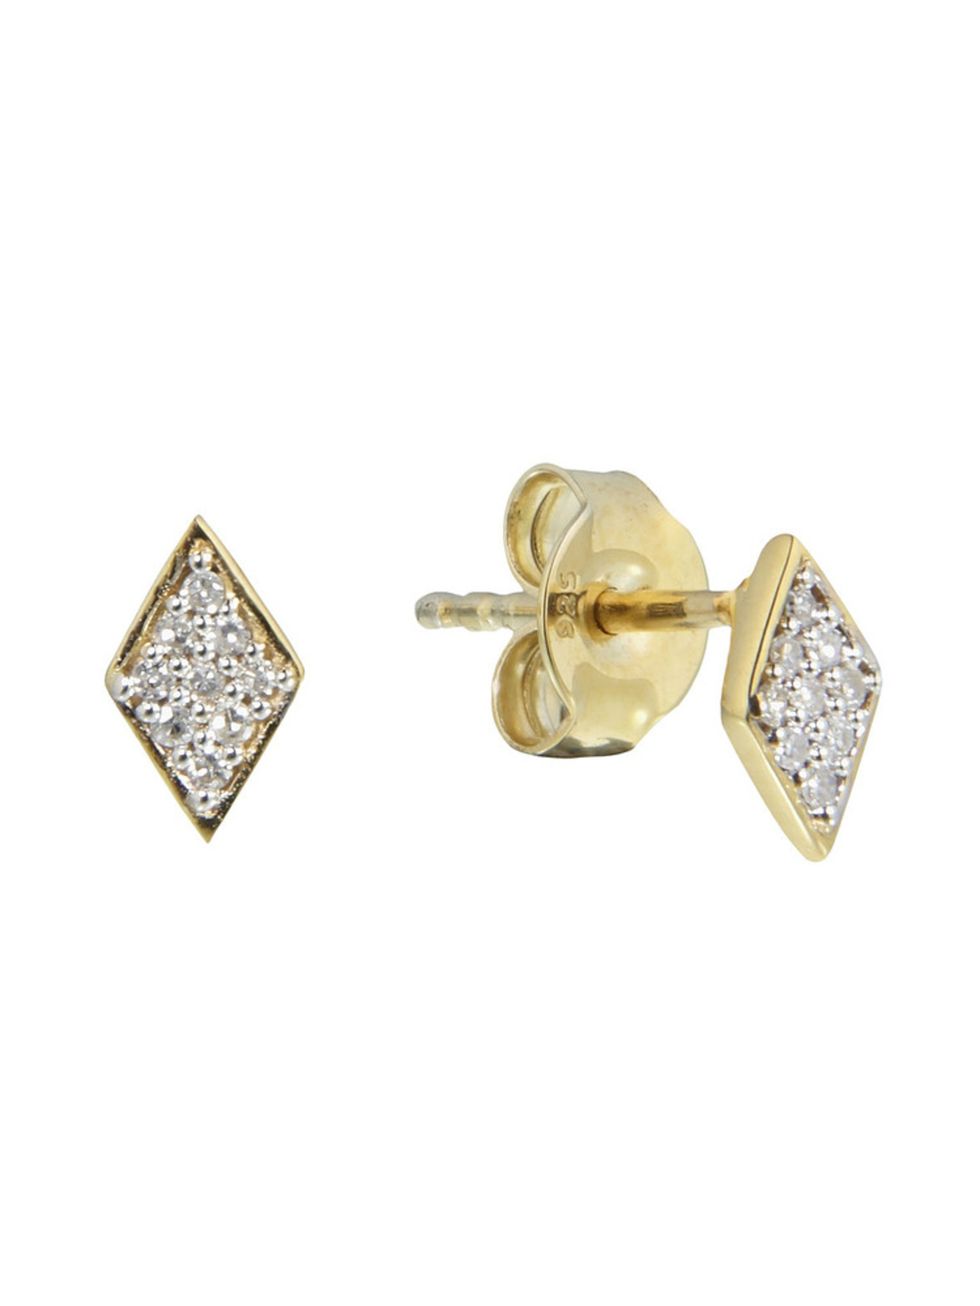 <p>Kite stud earrings, £120, <a href="http://carrieelizabeth.co.uk/products/tiny-pave-diamond-kite-stud-earrings" target="_blank">Carrie Elizabeth Jewellery</a></p>